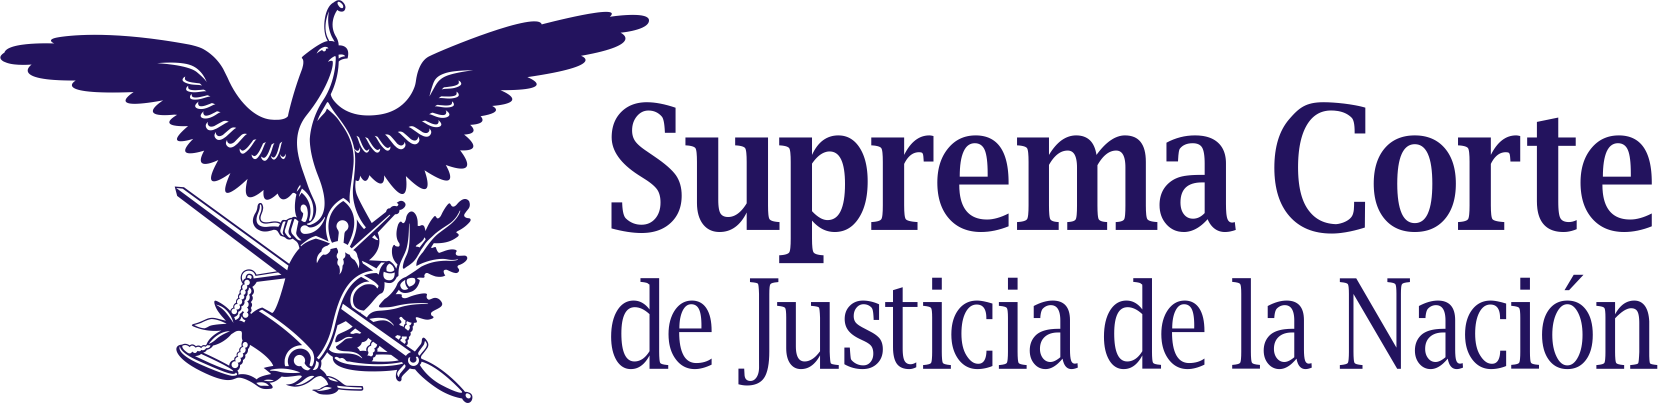 https://0201.nccdn.net/1_2/000/000/0b0/0dc/supreme_court_logo.png